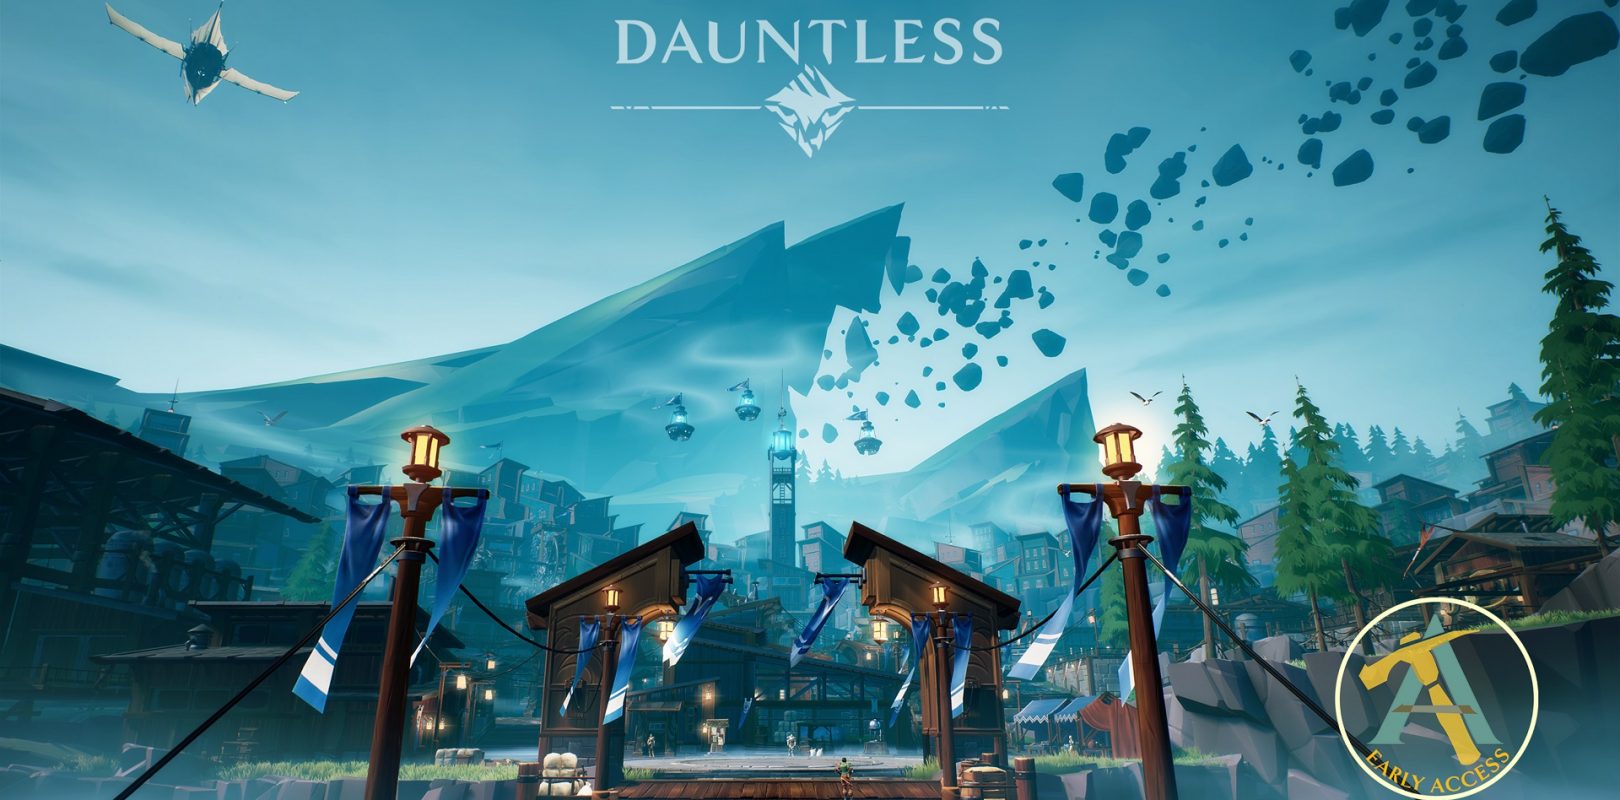 Migliori giochi gratis - Dauntless